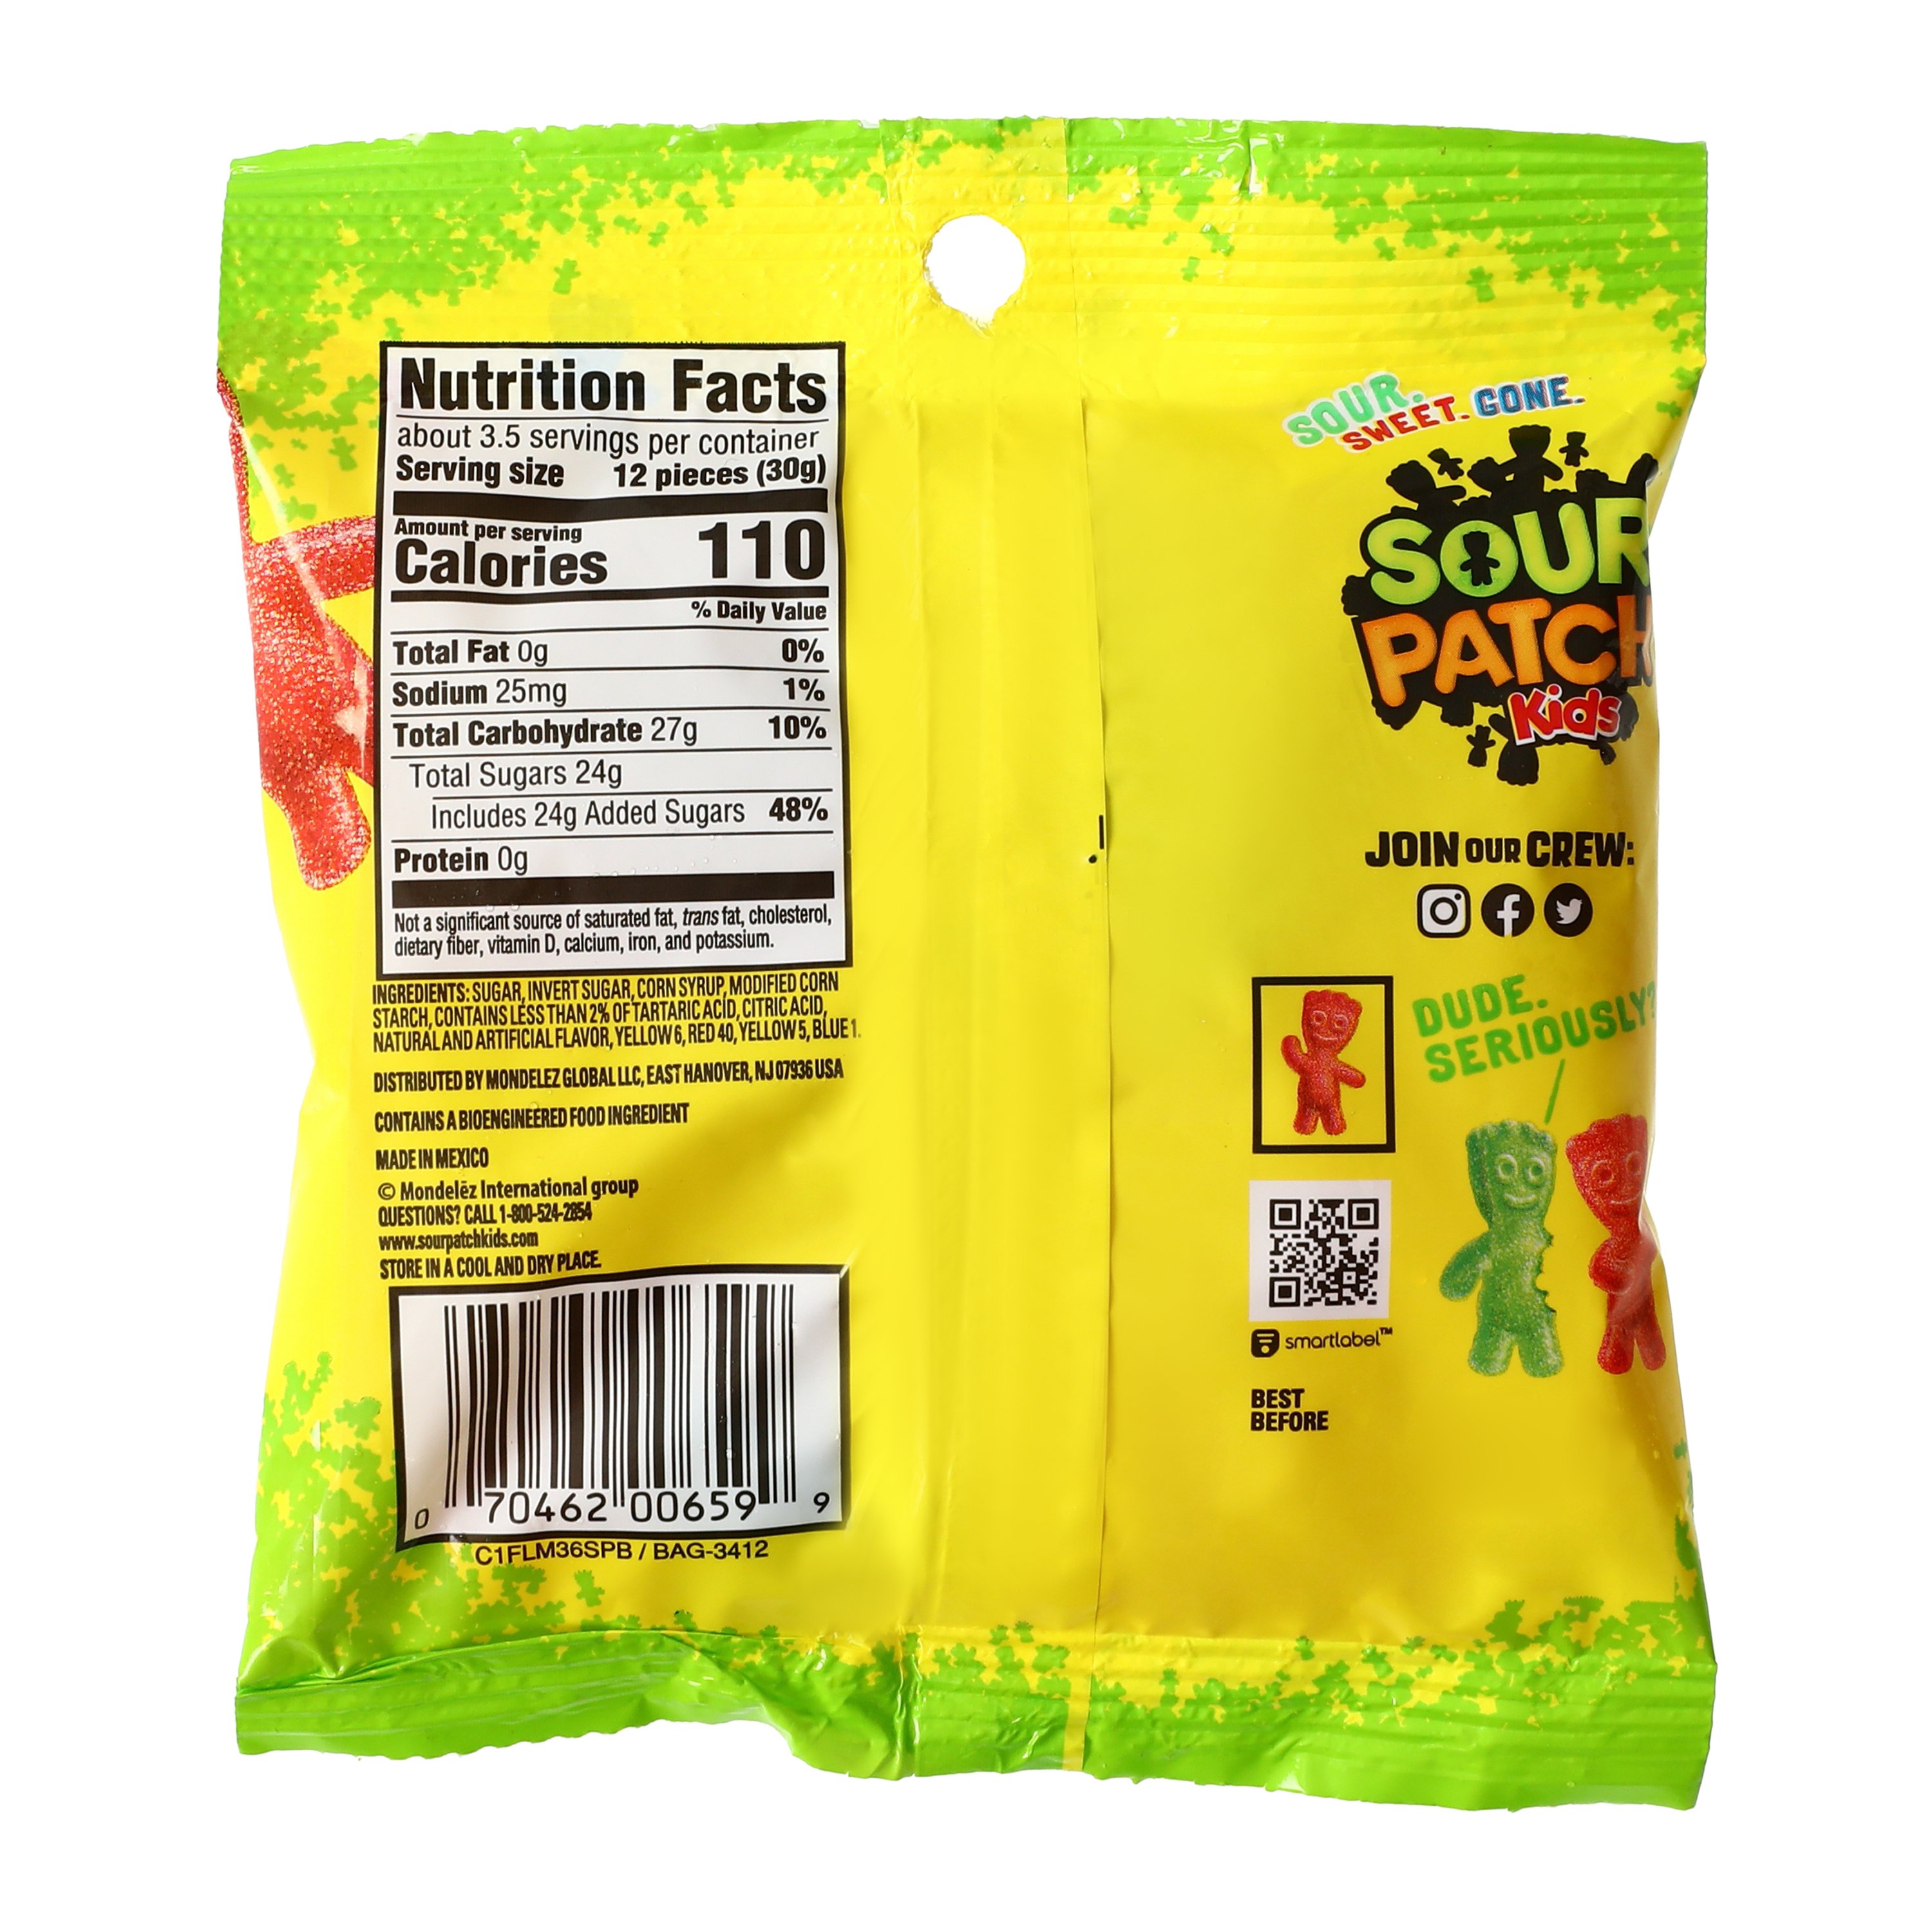 sour patch kids® candy 3.6oz